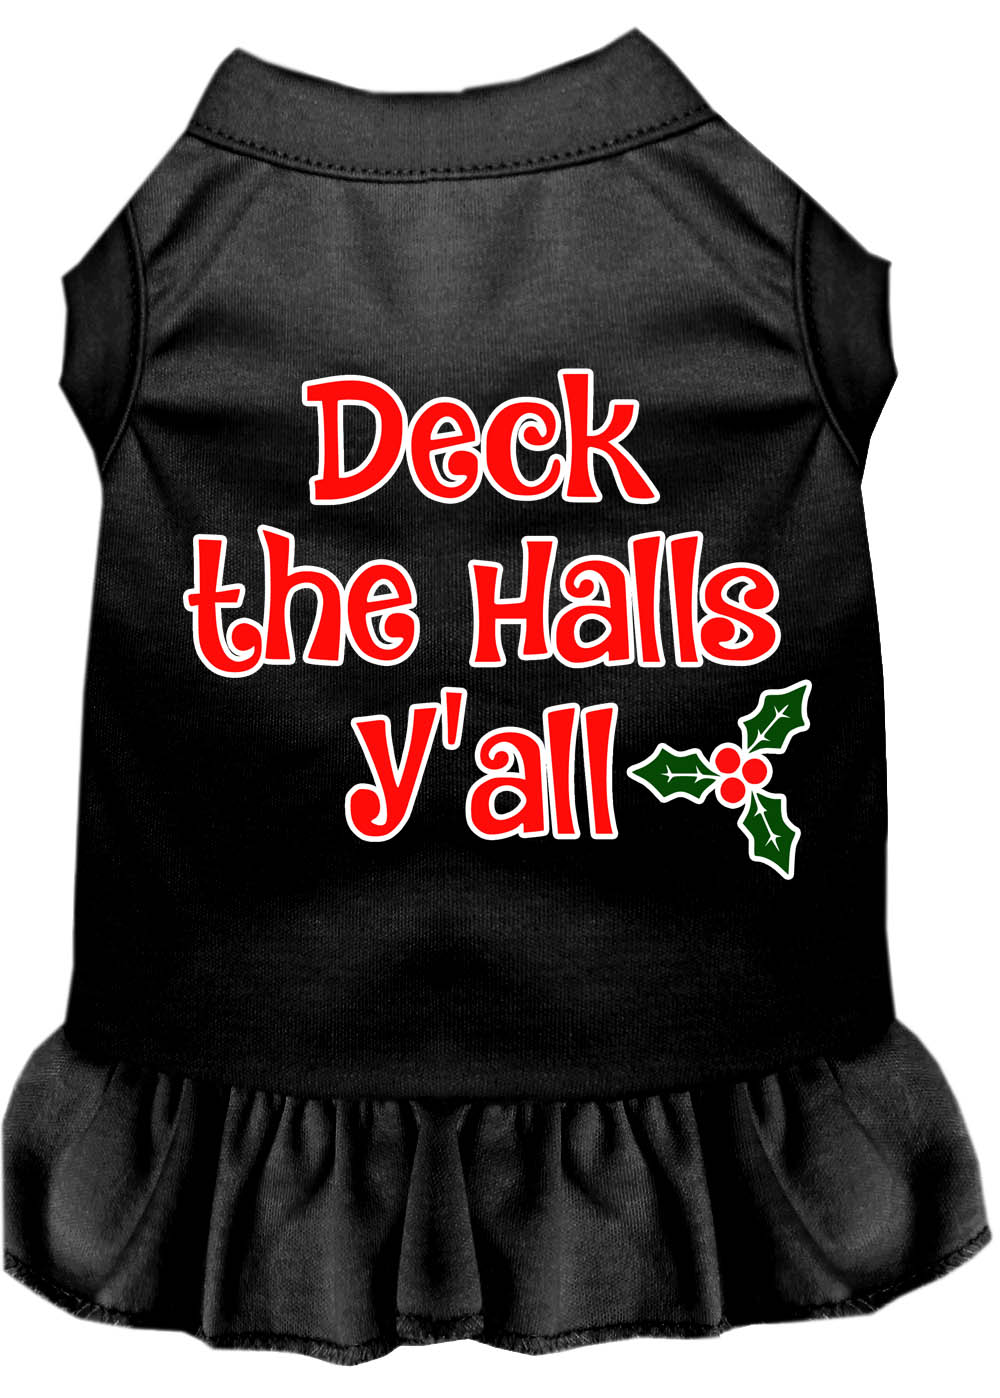 Deck the Halls Y'all Screen Print Dog Dress Black Lg